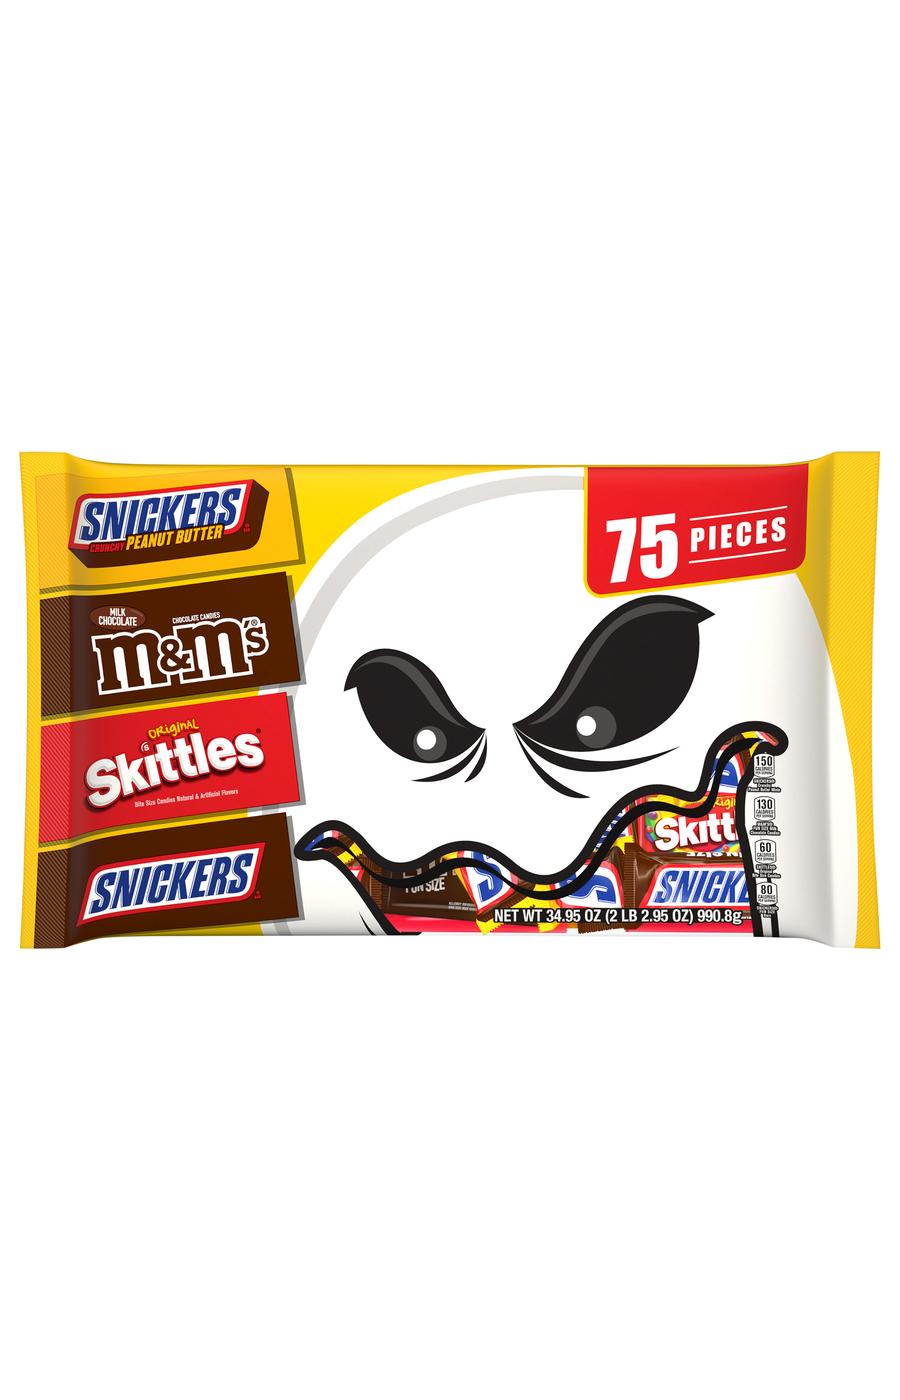  M&M'S Fun Size Peanut Milk Chocolate Halloween Candy